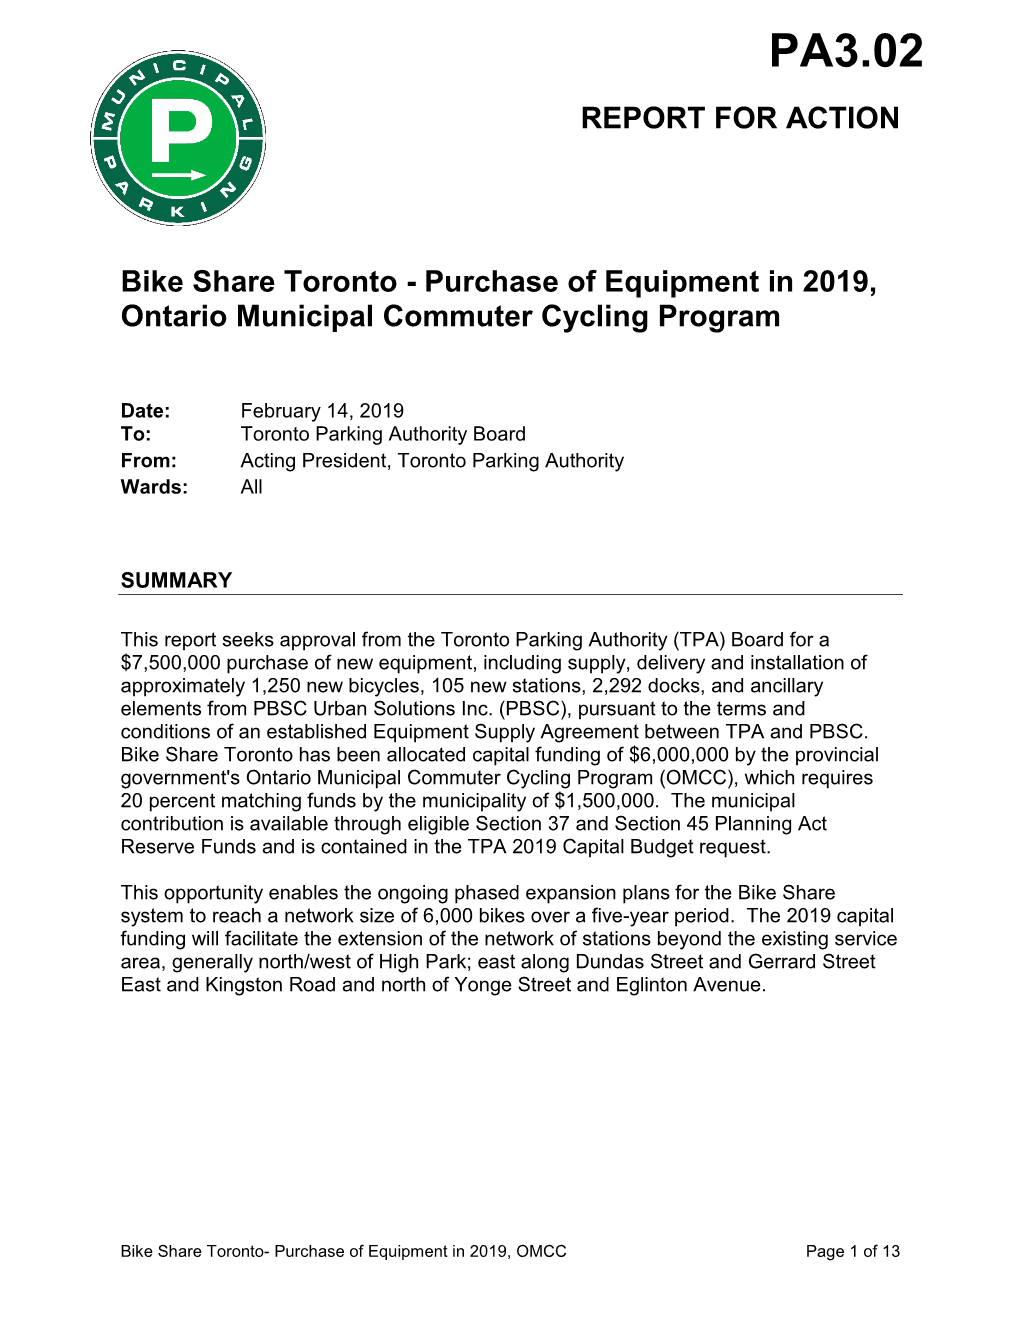 Bike Share Toronto - Purchase of Equipment in 2019, Ontario Municipal Commuter Cycling Program